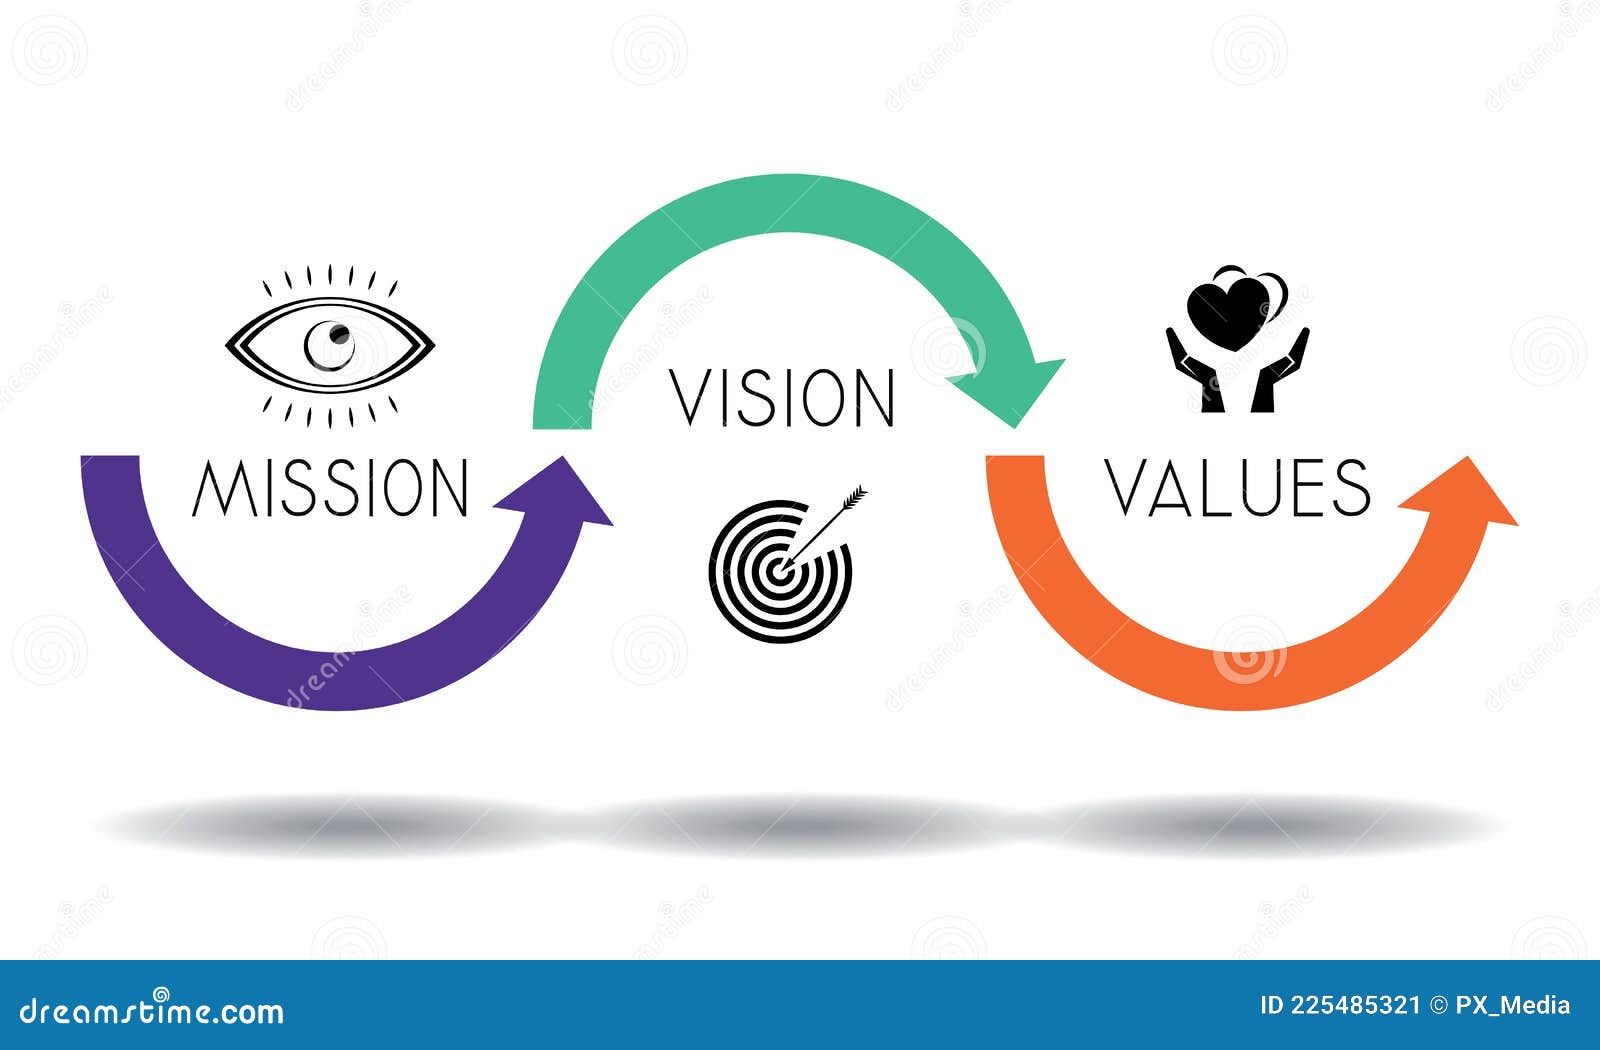 Values, Vision & Mission